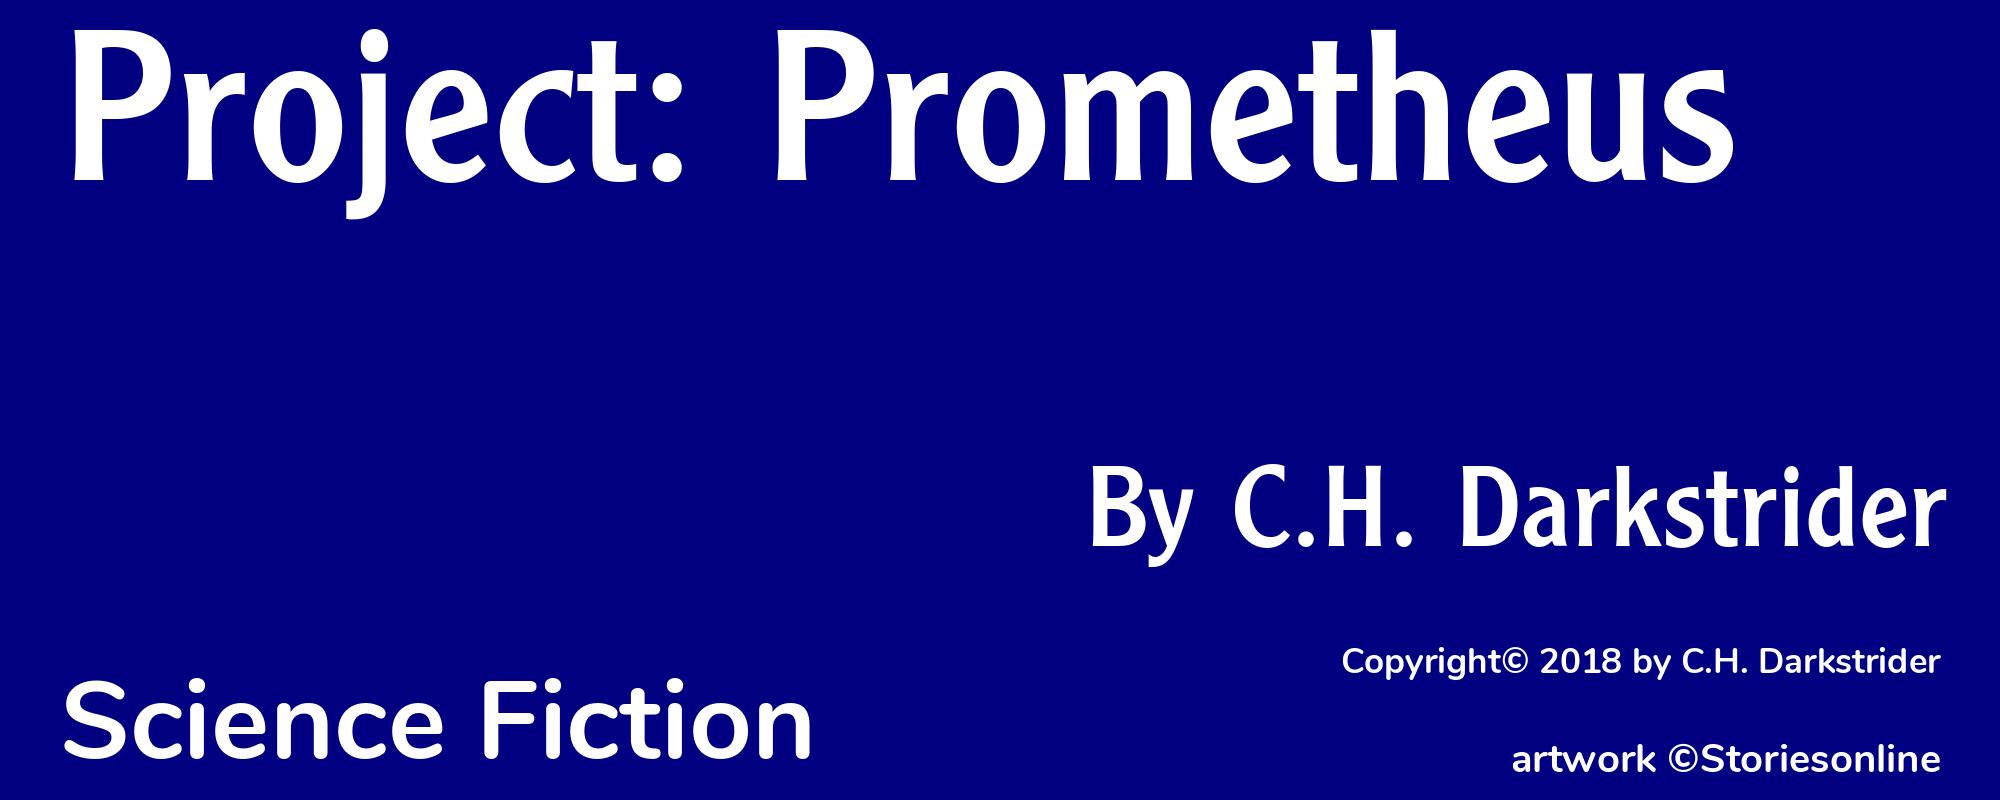 Project: Prometheus - Cover